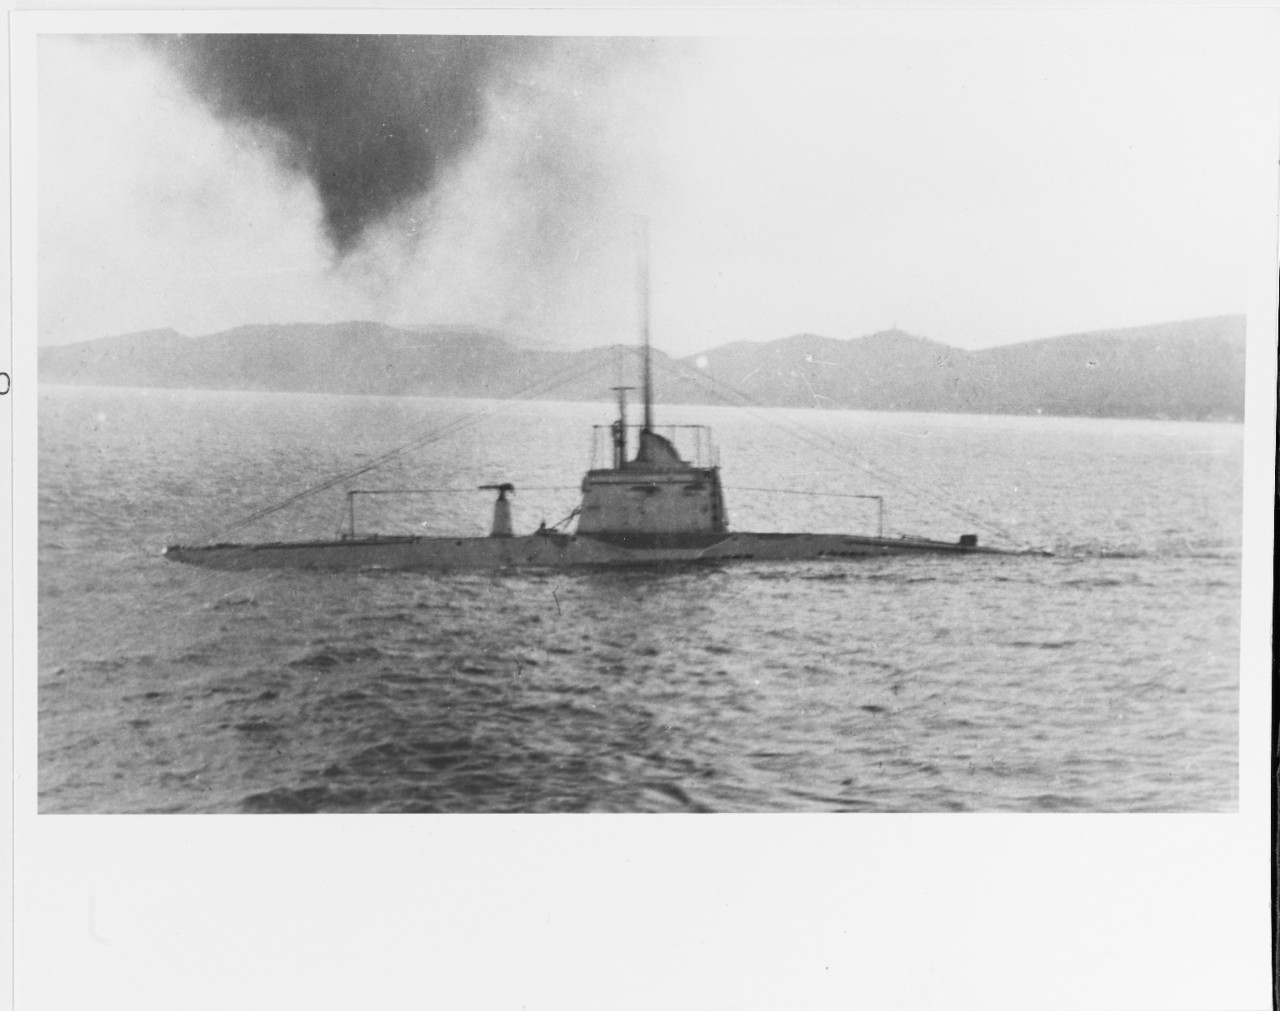 U-15 (Austrian Submarine, 1915-1920)